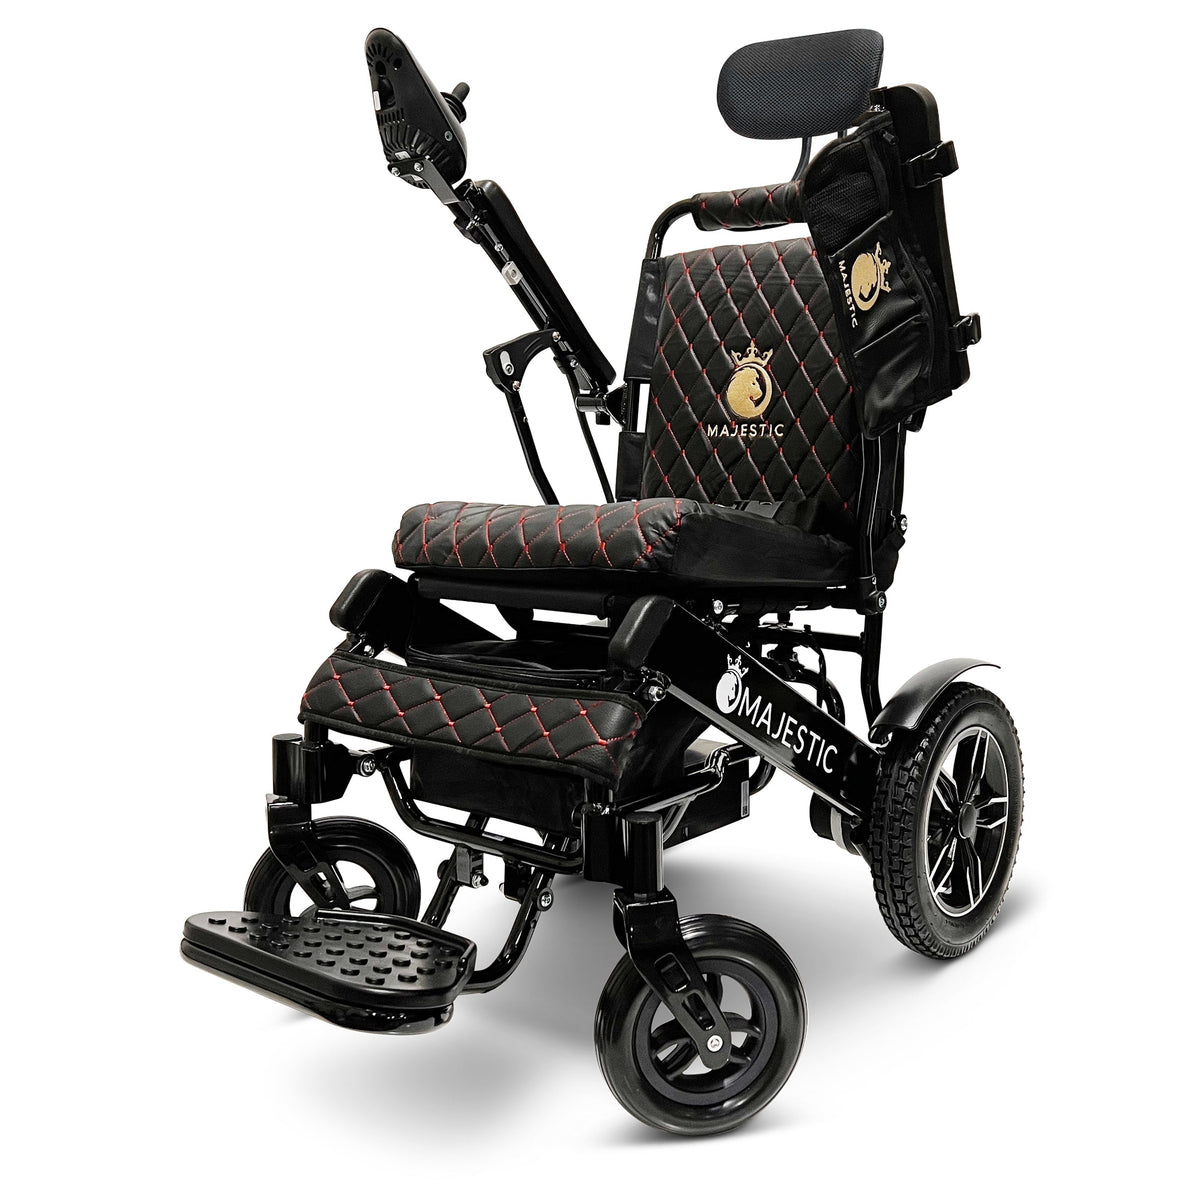 MAJESTIC IQ-8000 Auto Recline Remote Controlled  Electric Wheelchair